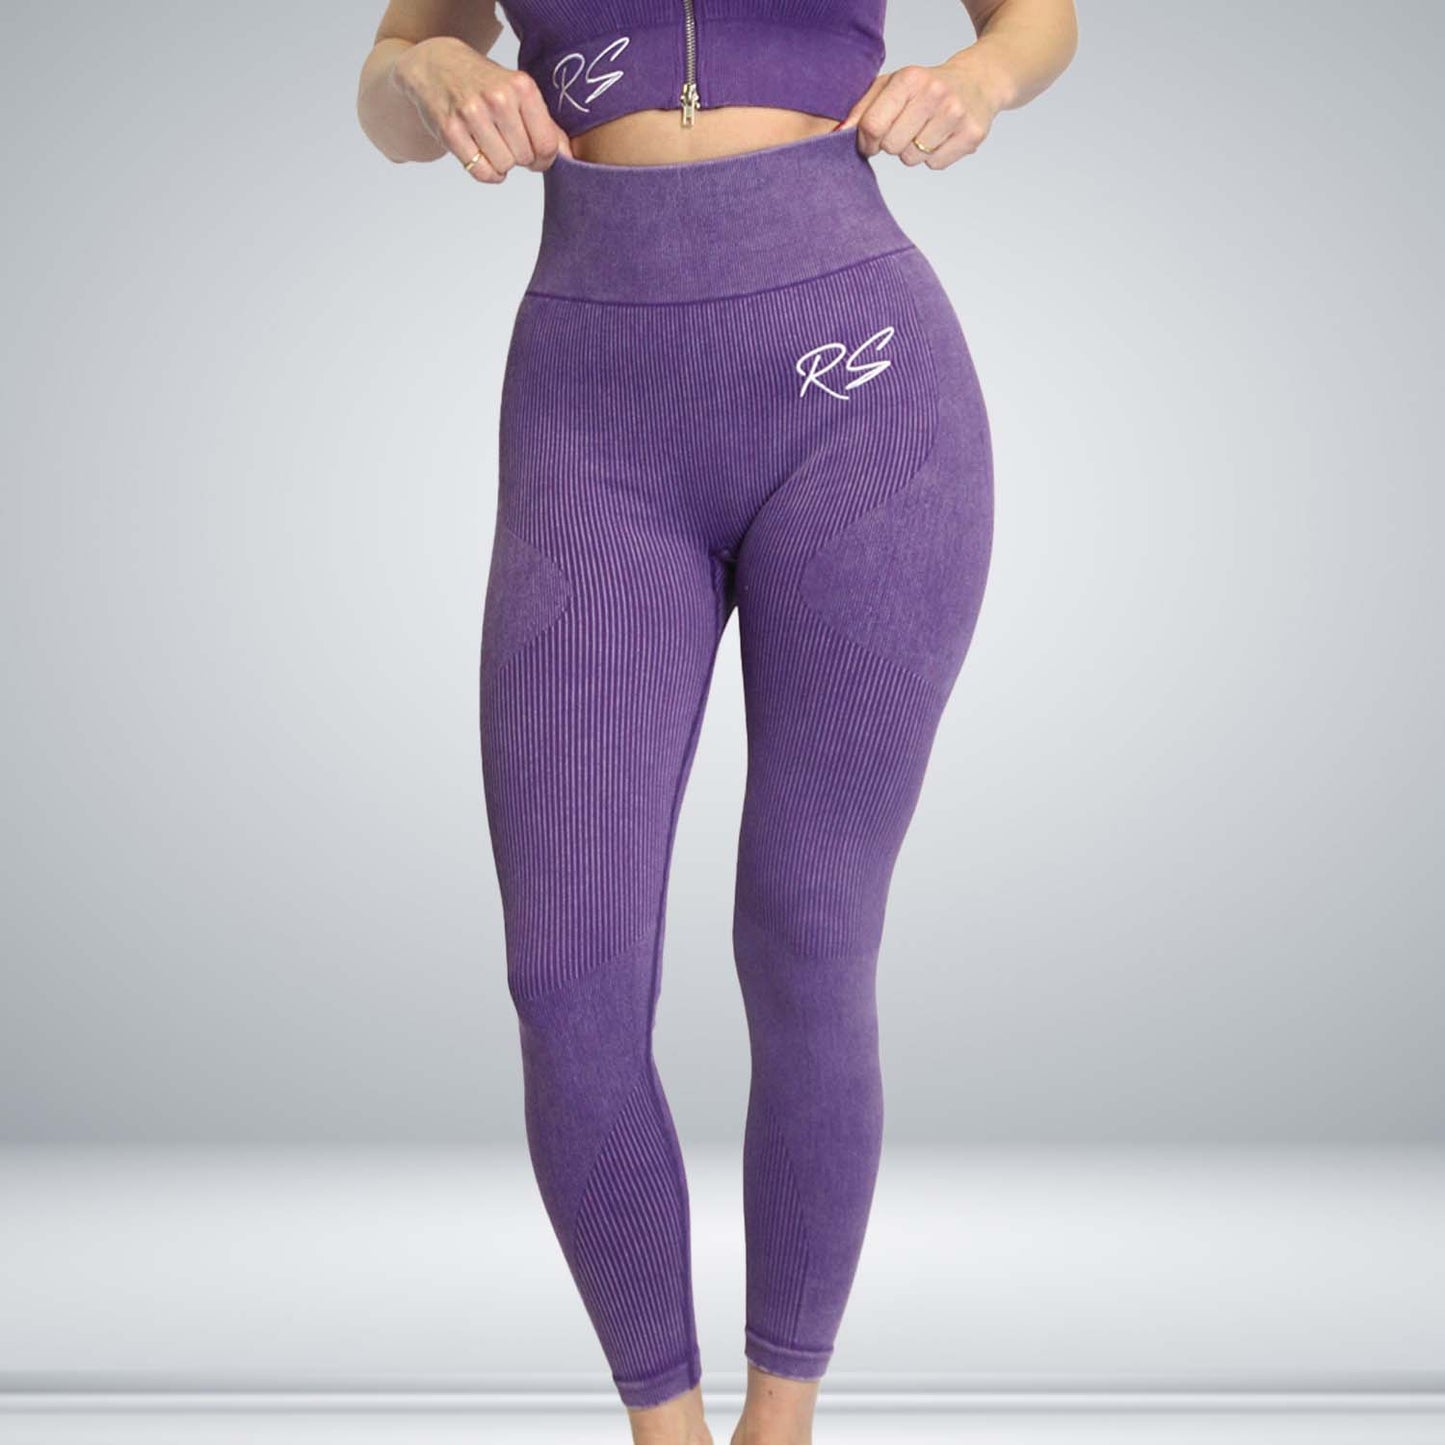 Zipp legging purple